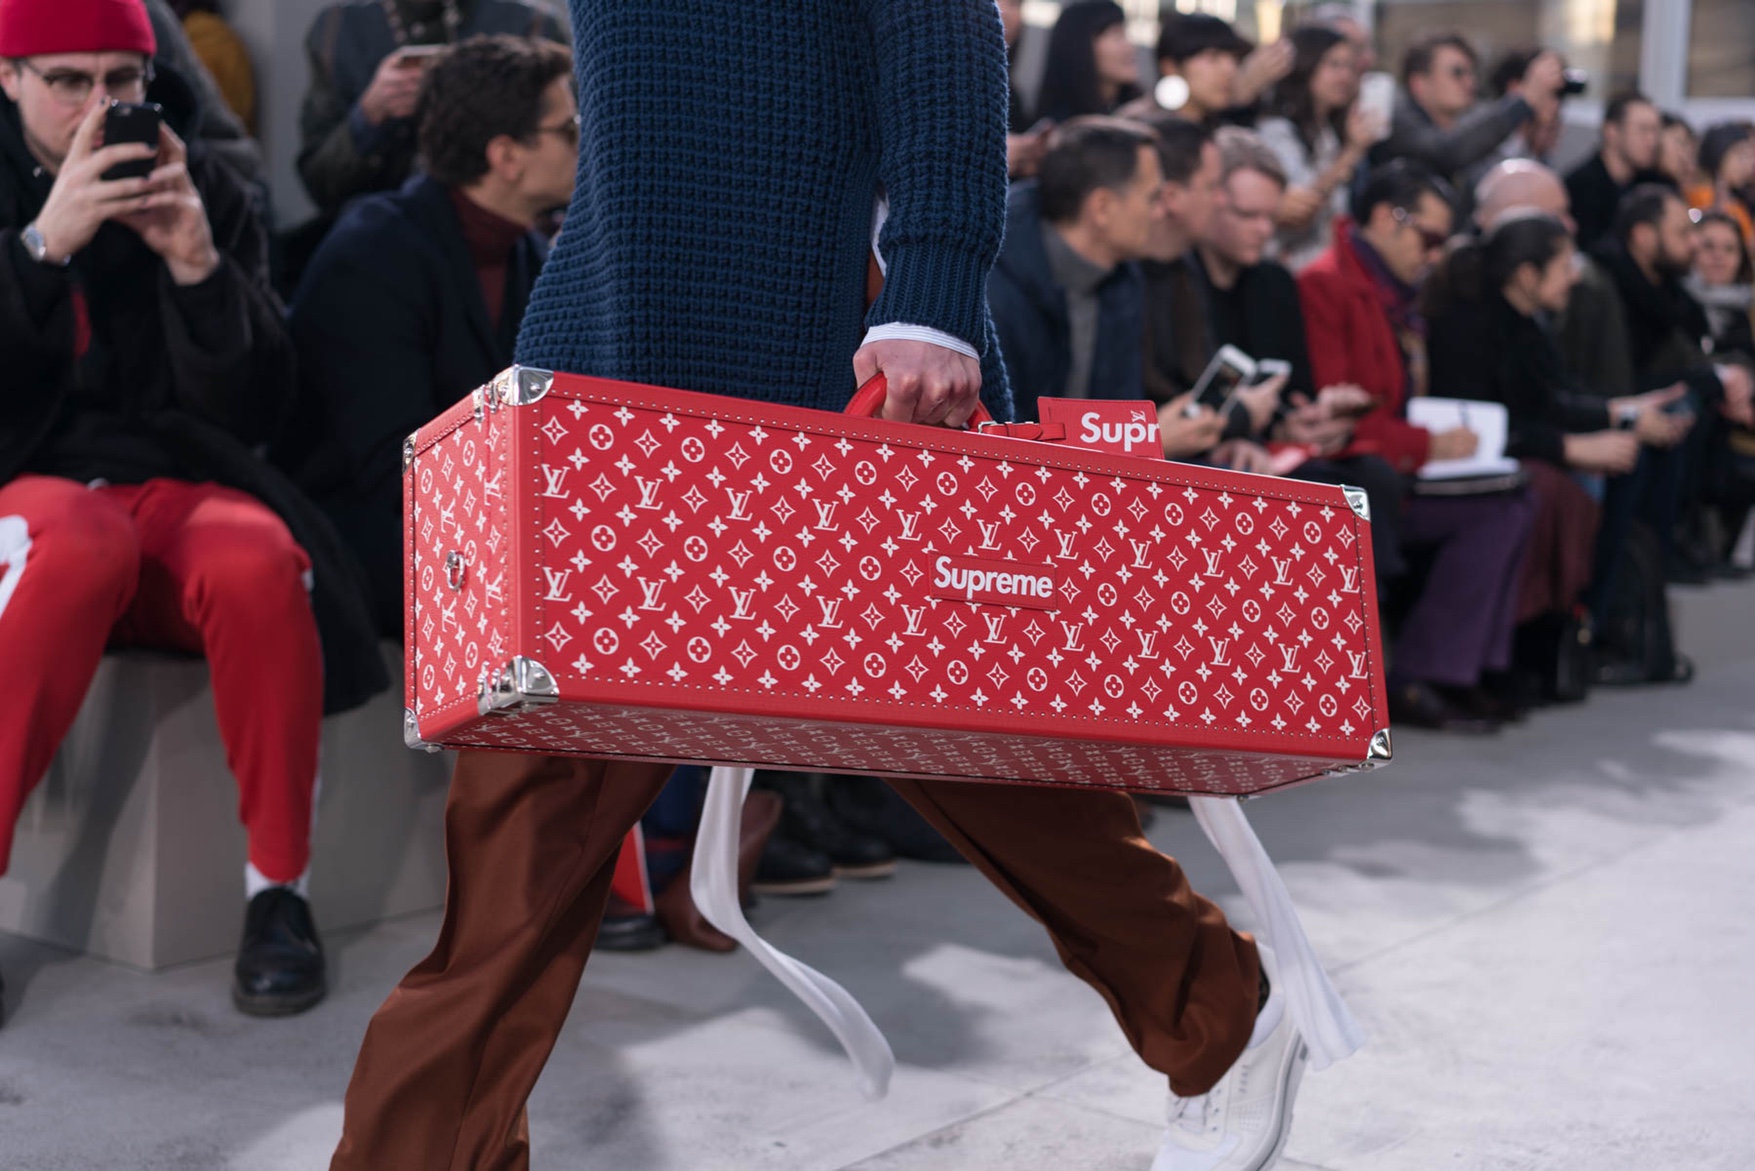 New York Denies Supreme x Louis Vuitton Pop-Up